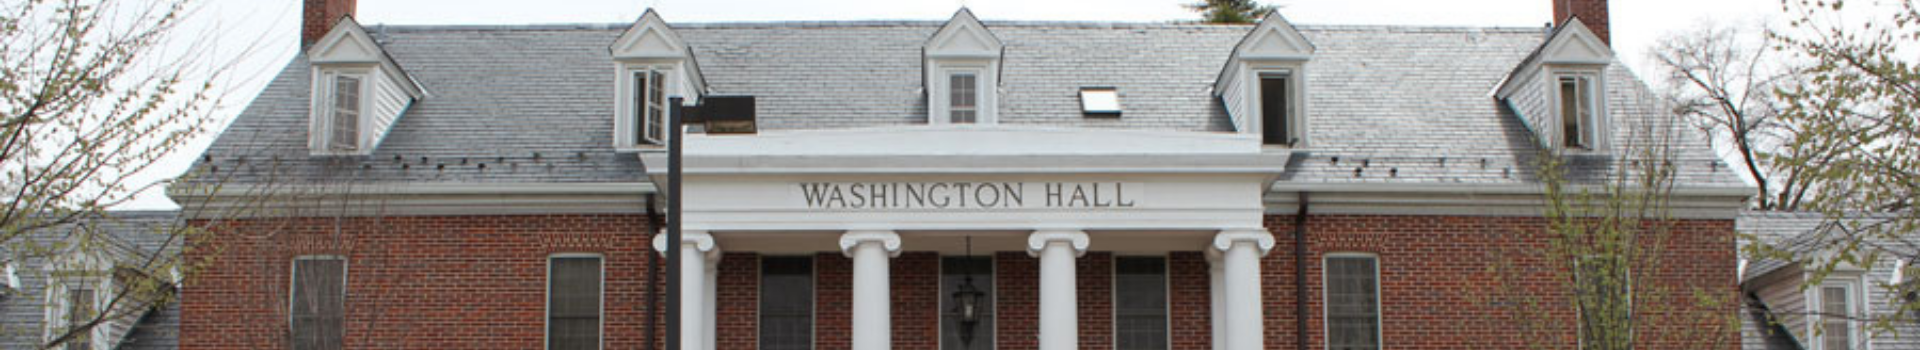 exterior of Washington Hall